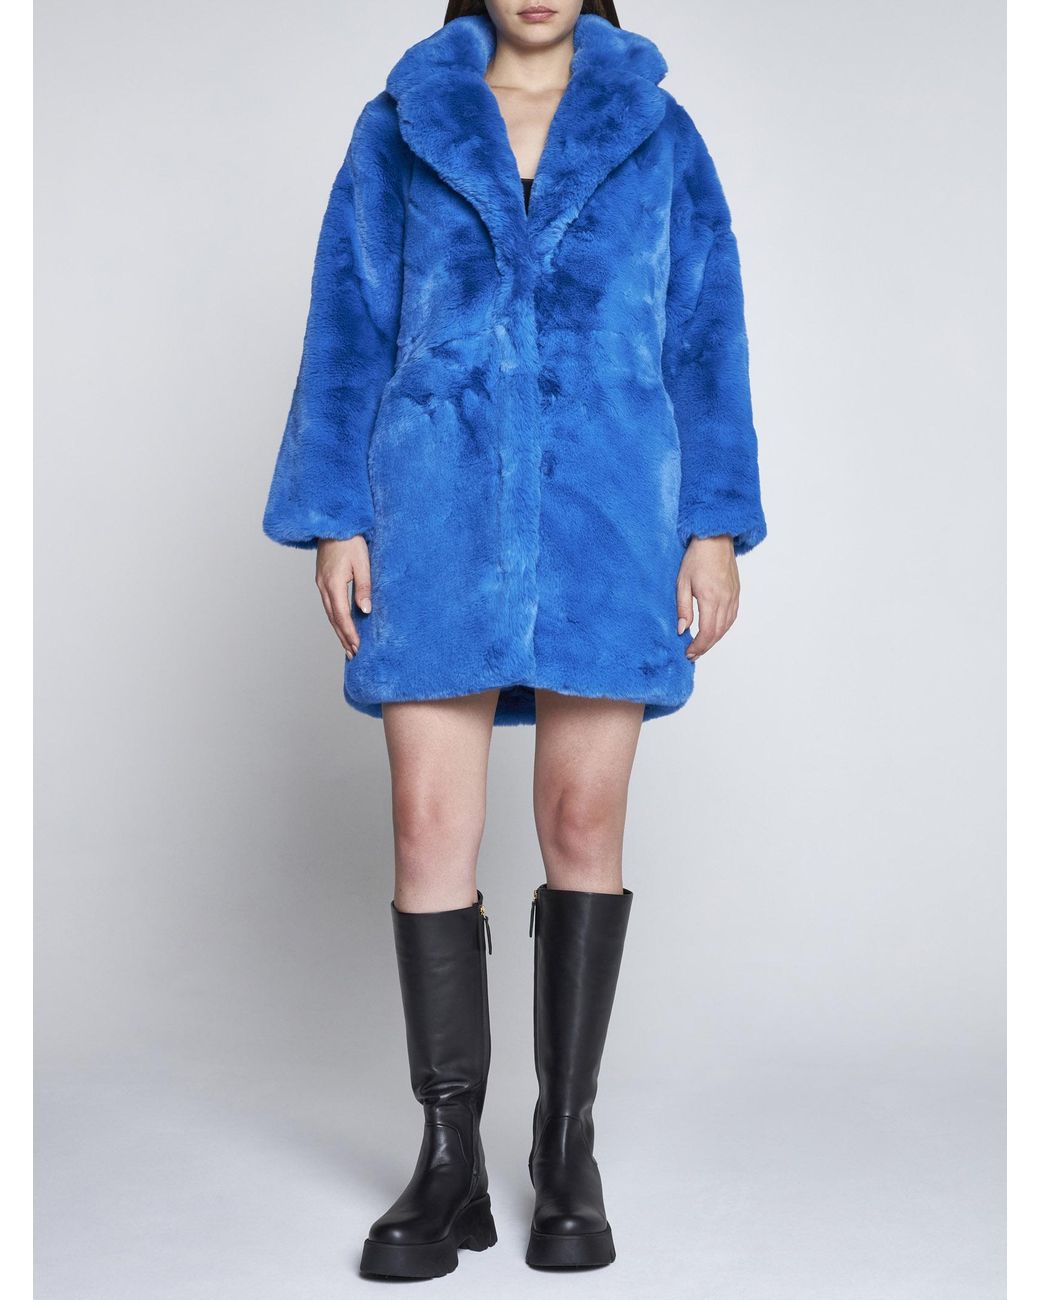 Apparis Stella Faux Fur Coat in Blue | Lyst